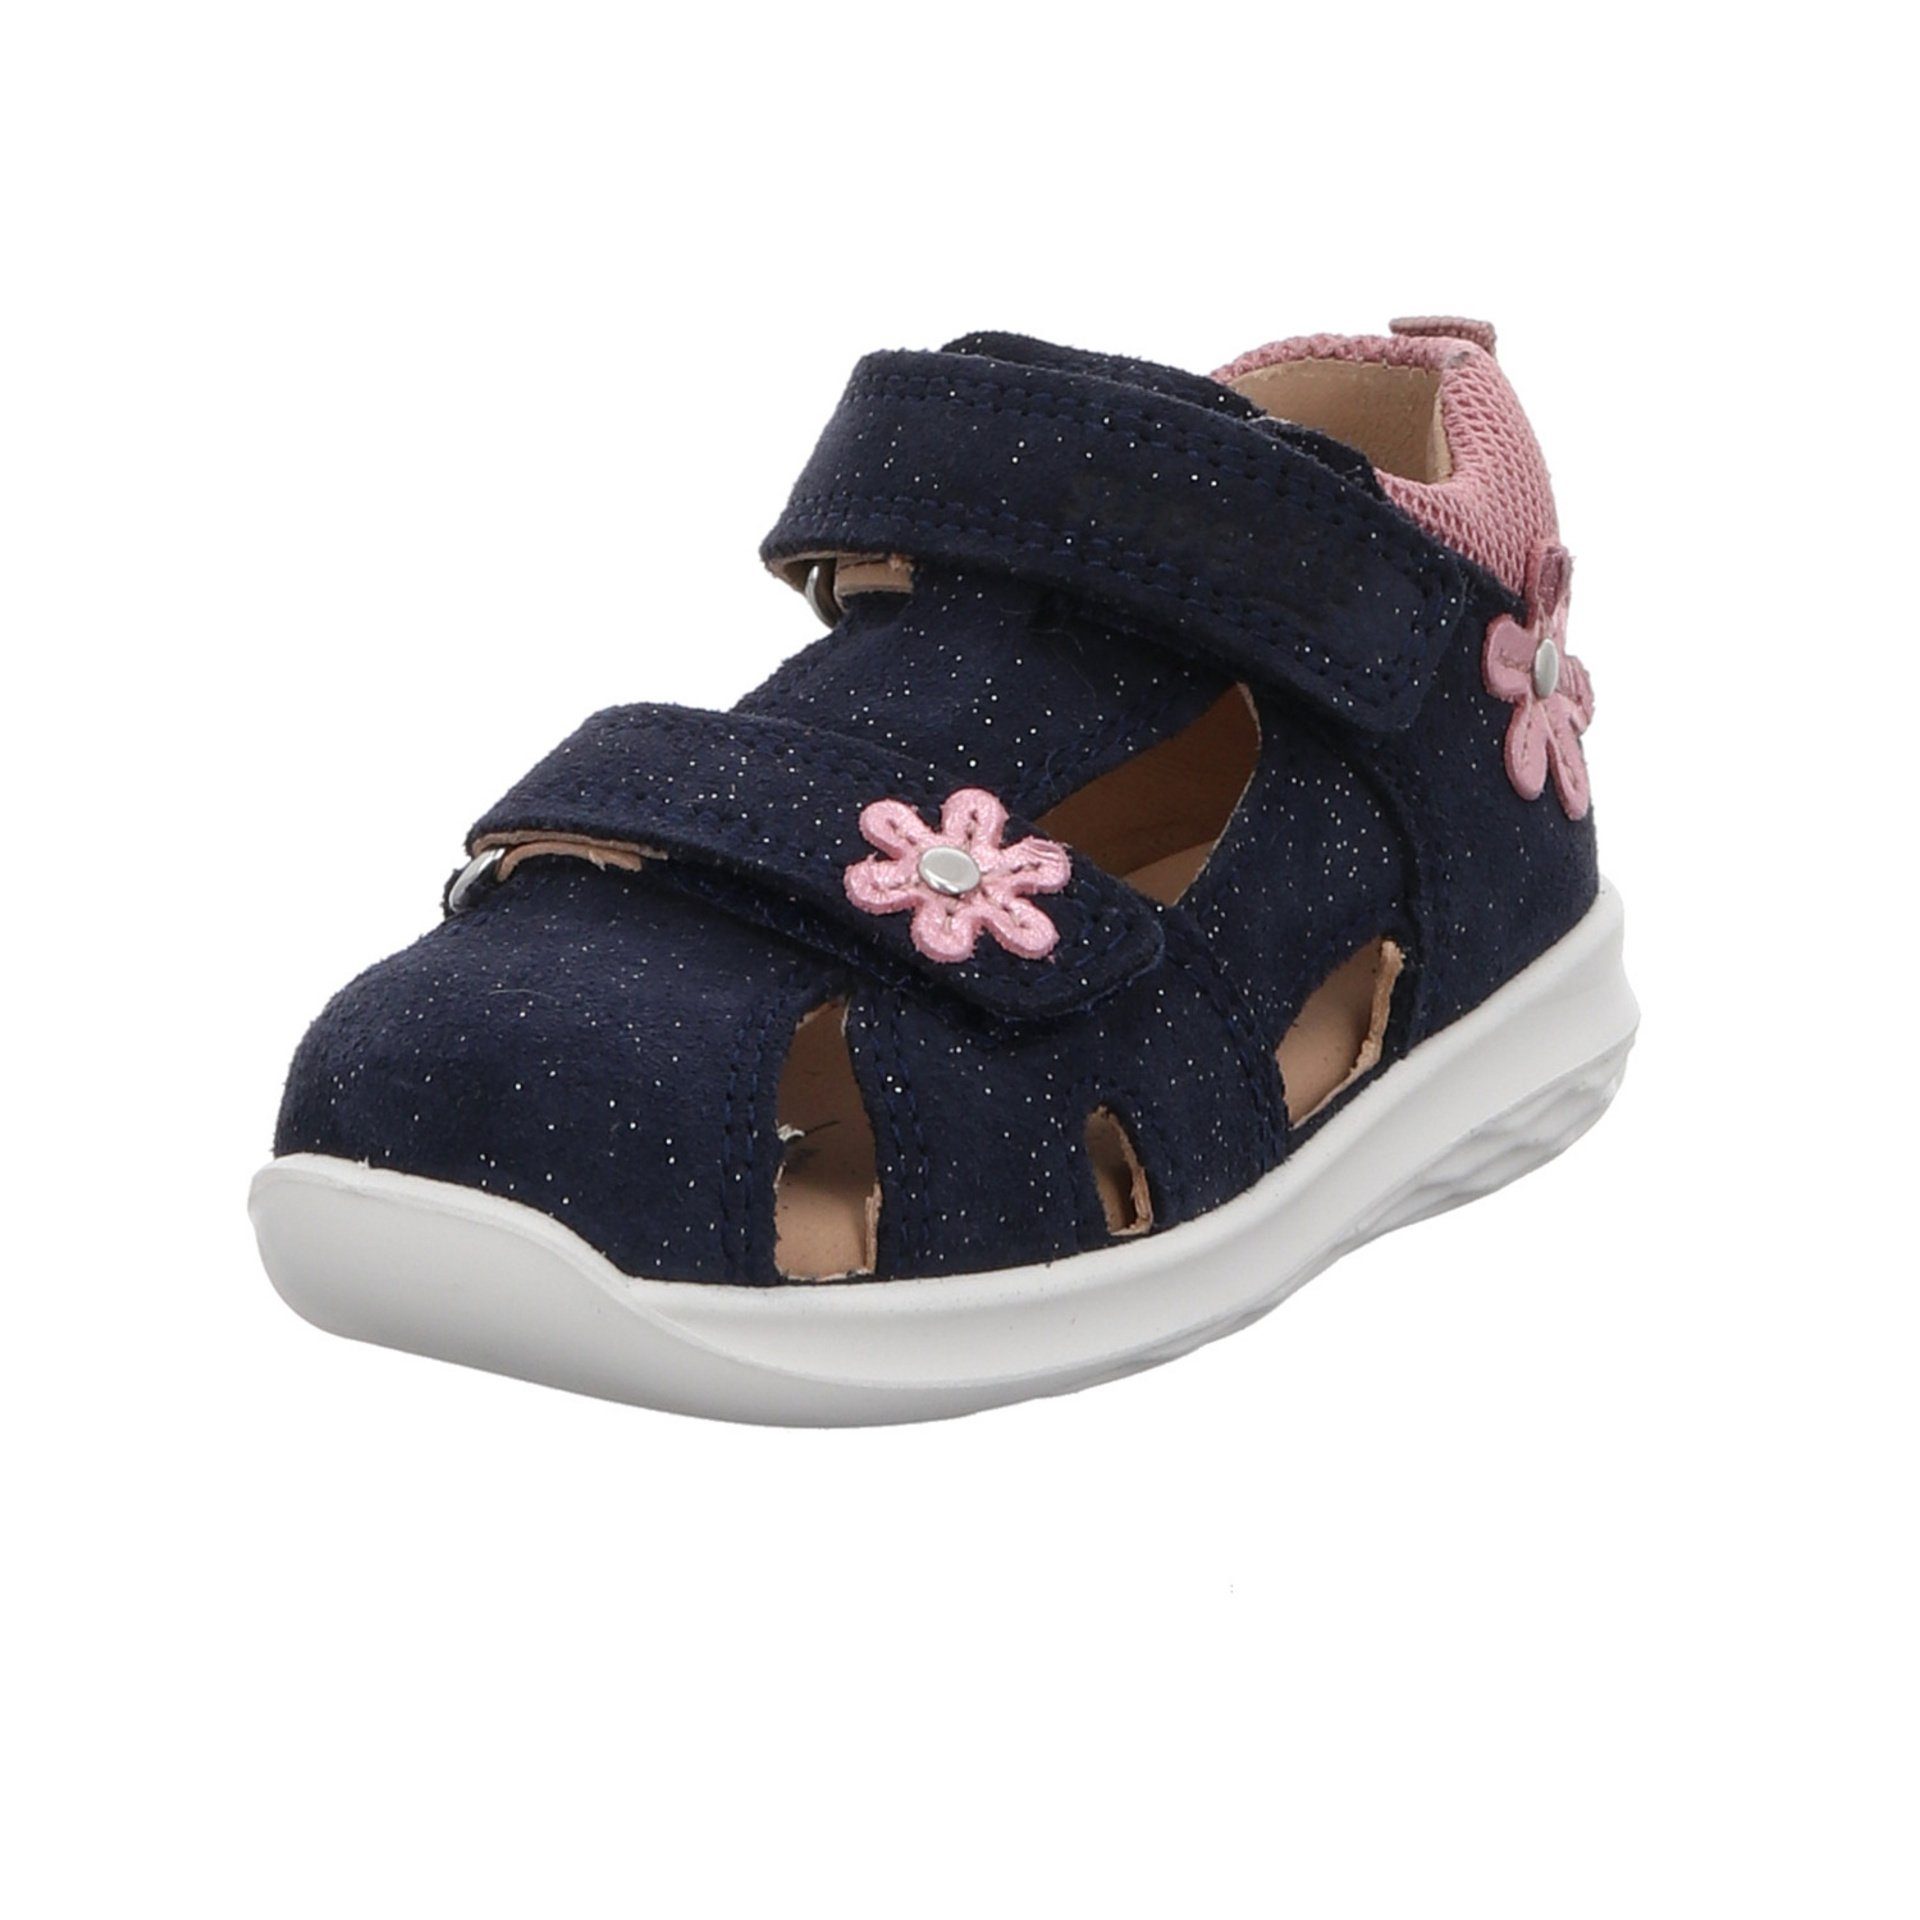 Superfit Mädchen Sandalen Schuhe Bumblebee Minilette Sandale Leder-/Textilkombination blau sonst Kombi